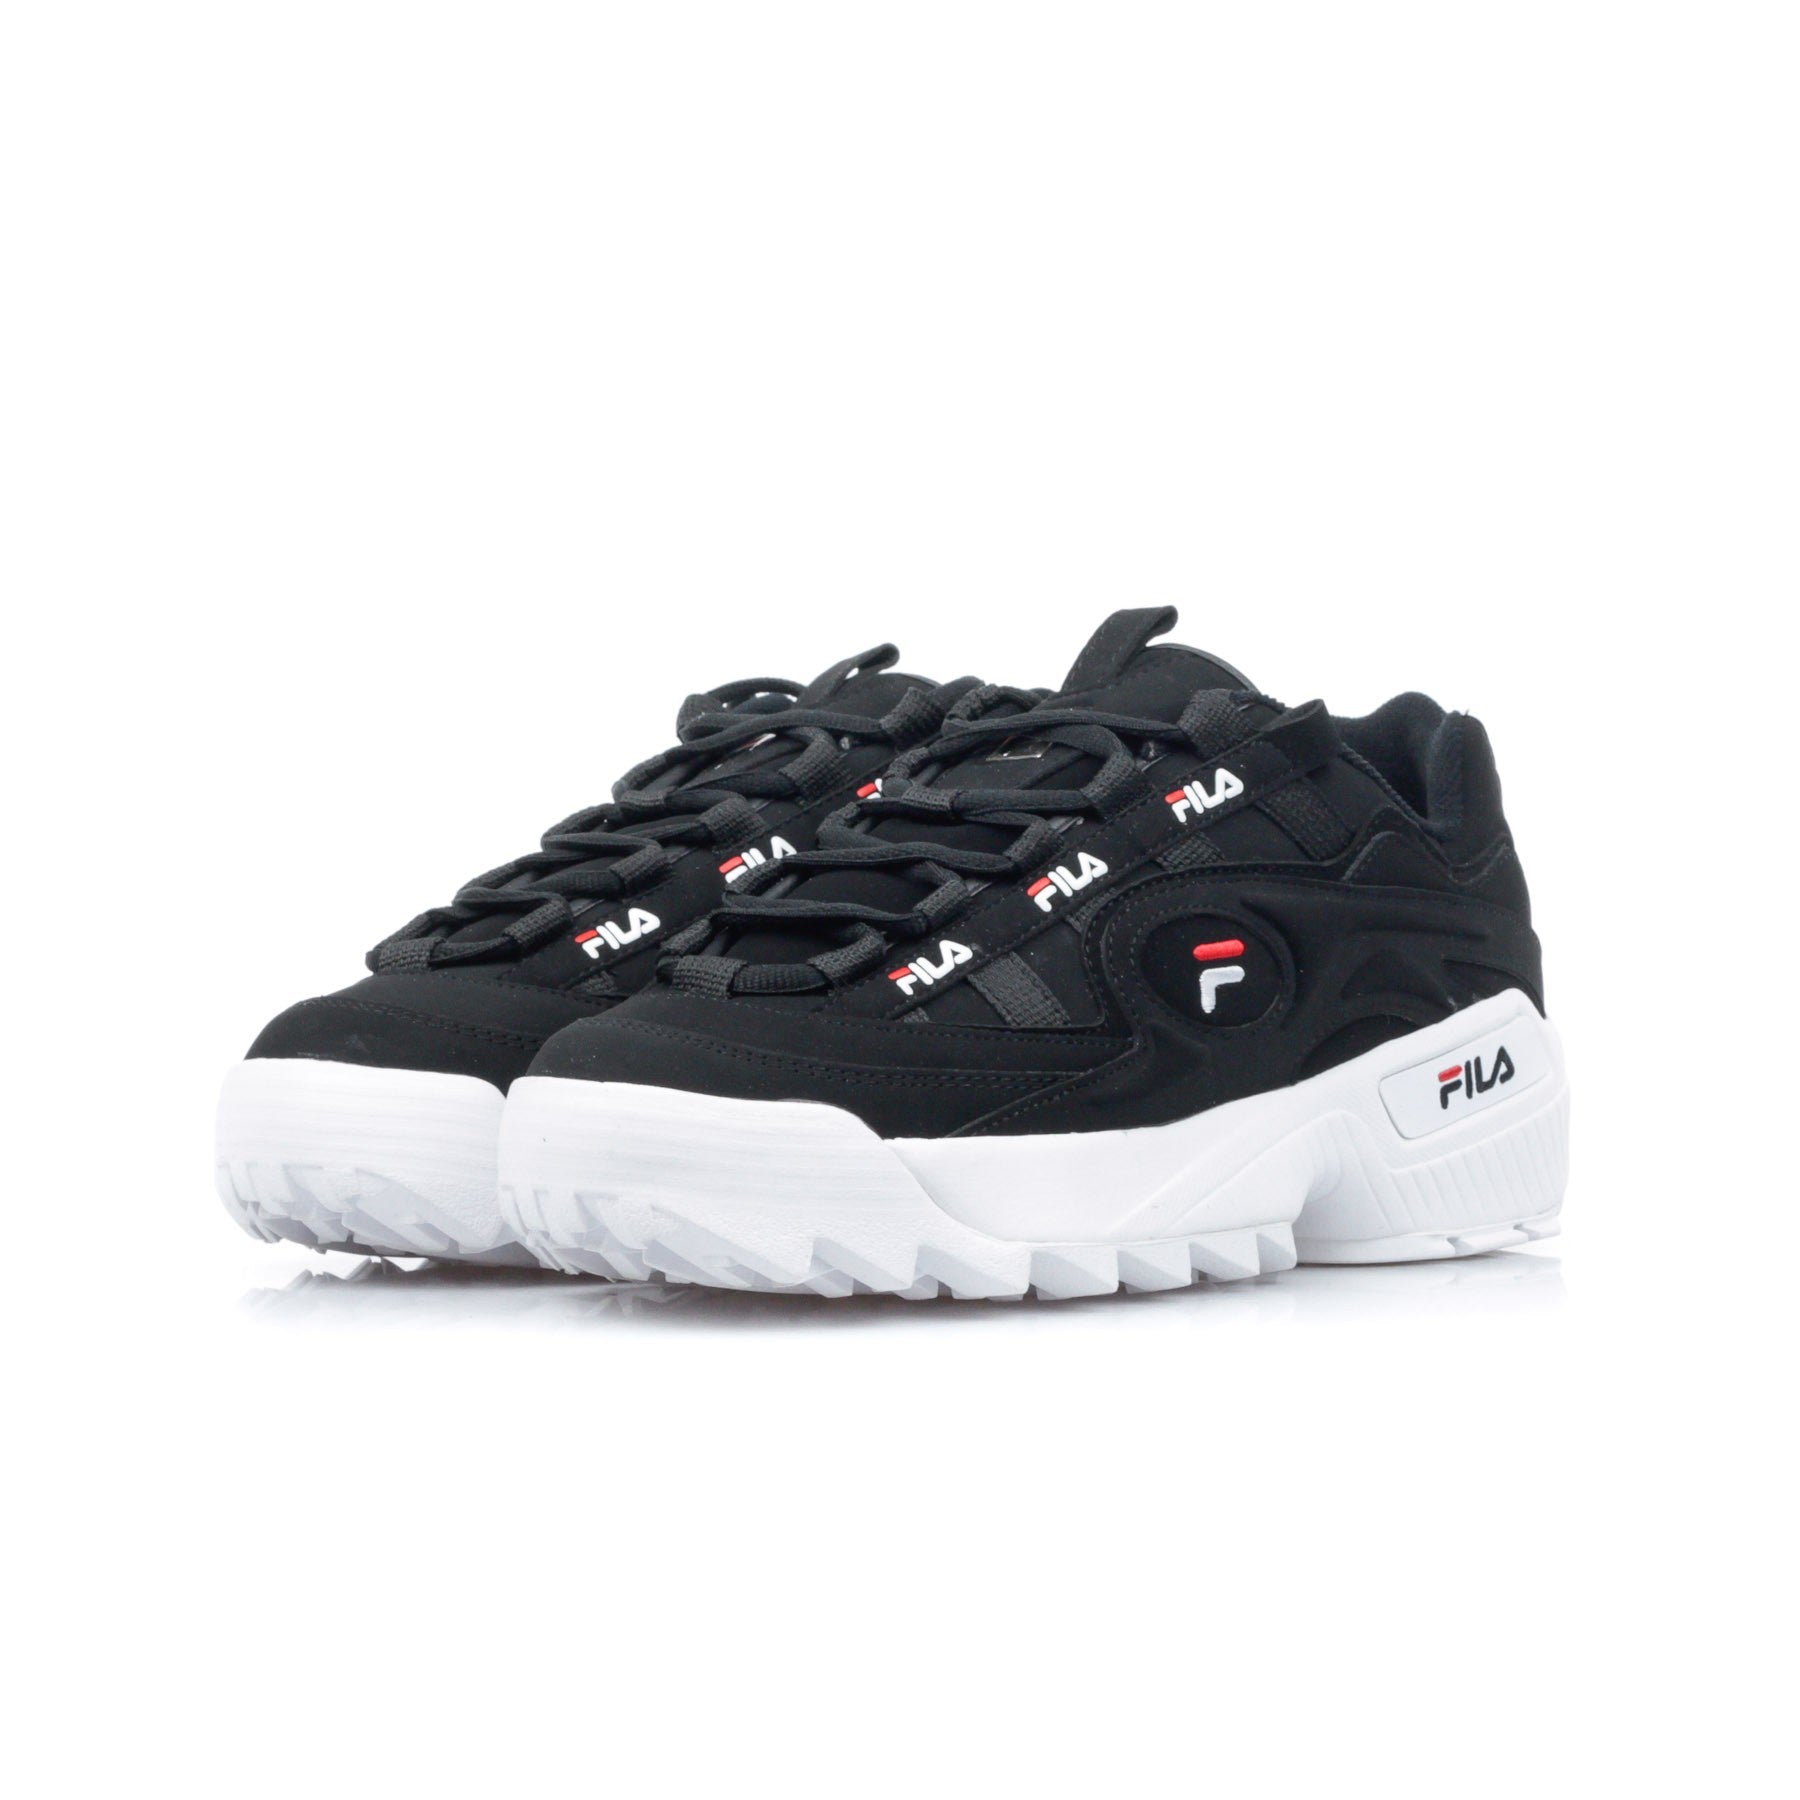 D-formation Men's Low Shoe Black/white/fila Red